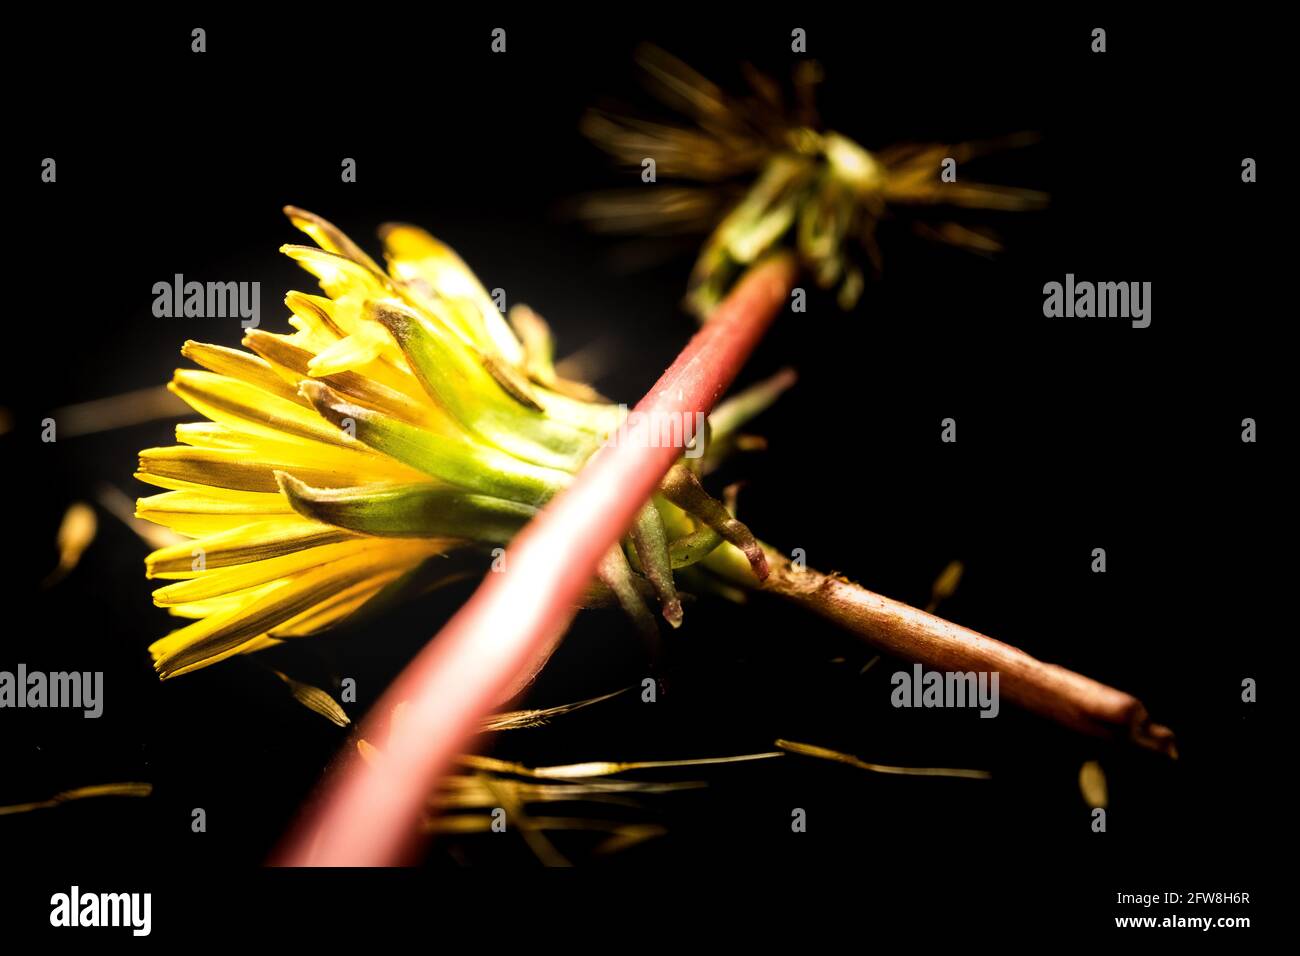 Isolated Yellow Dandelion Flower Head Laying Underneath Dandelion Seed Head Stock Photo